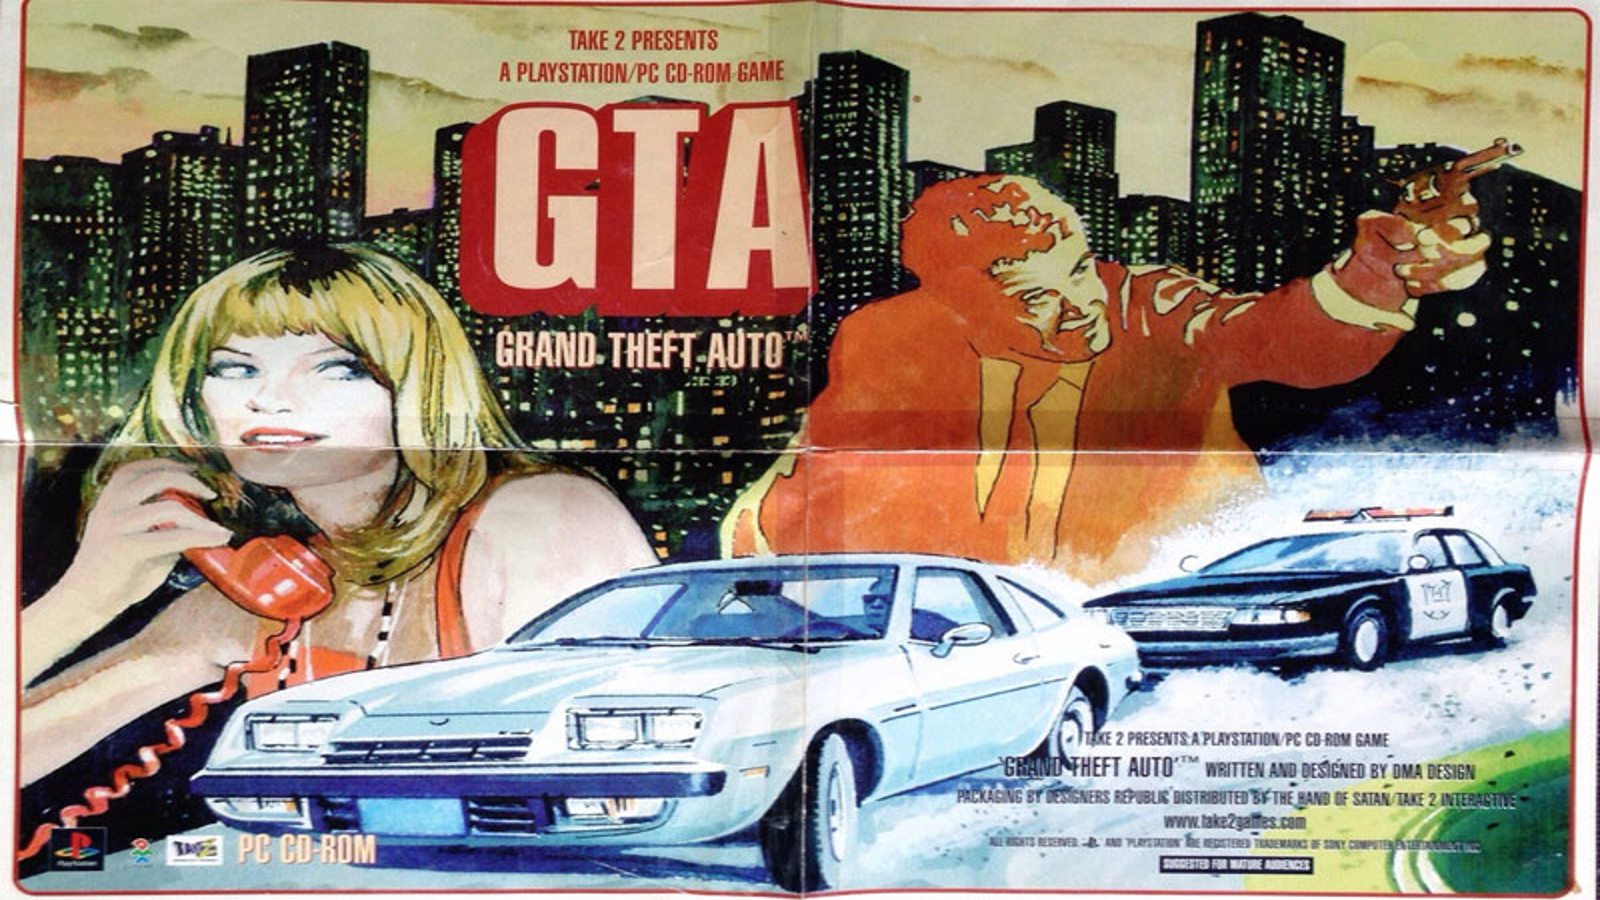 Remember the original GTA poster? It was pretty cool